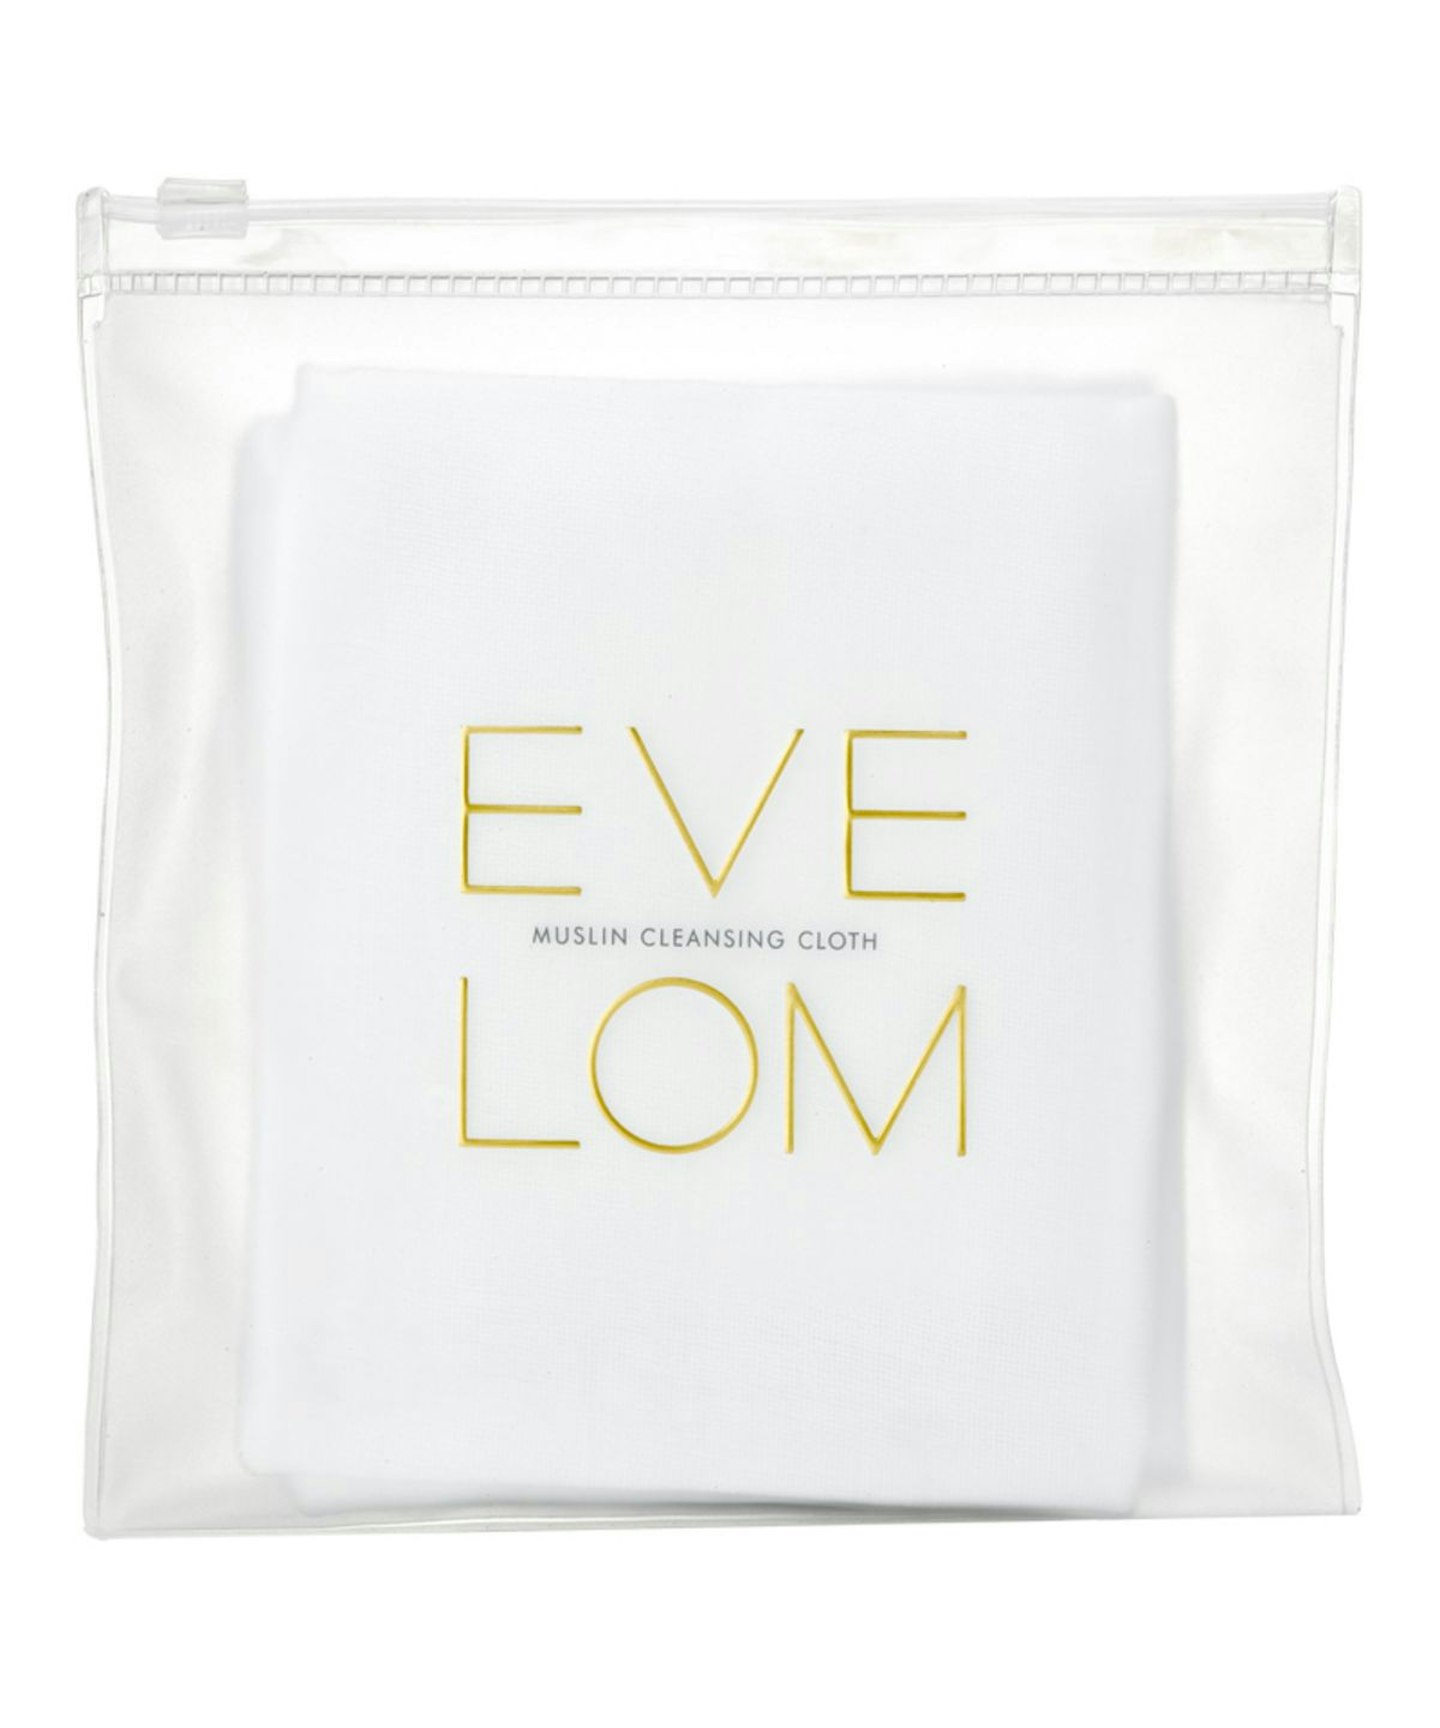 Eve Lom Muslin Cloth x 3, £14